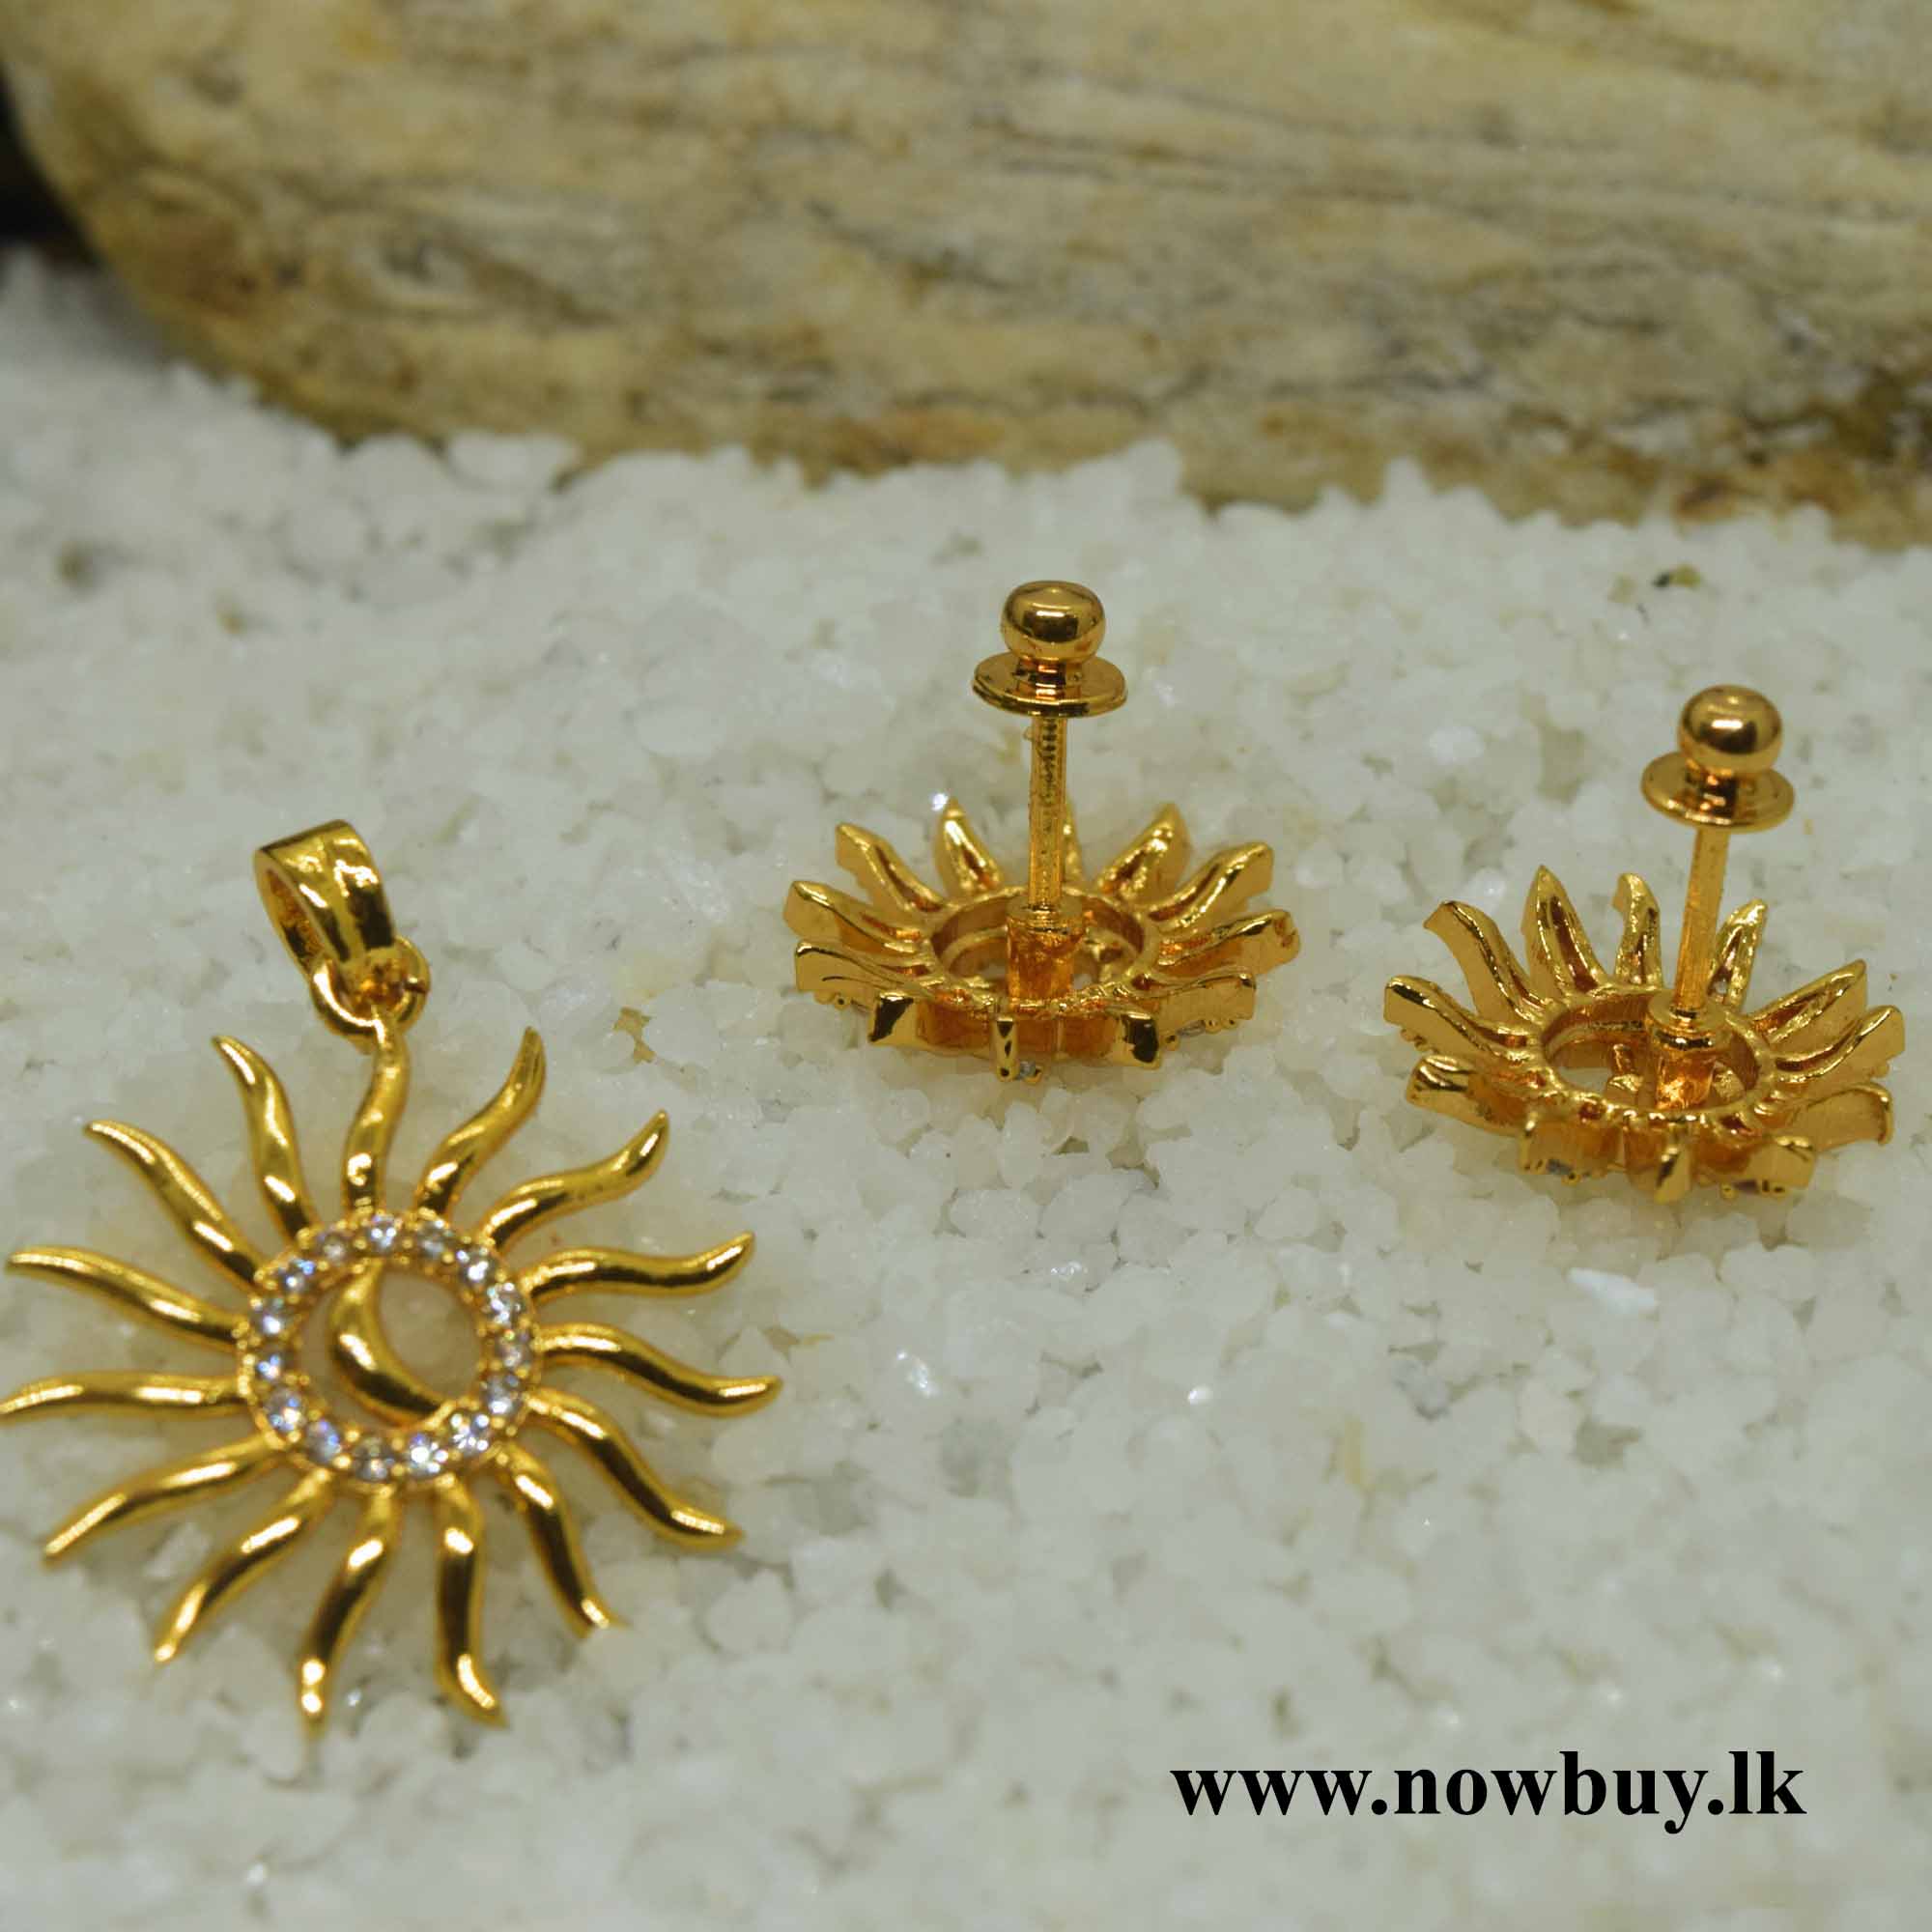 Gold Plated Sun Theme Pendant With Earrings For Women (NBLK) Stud earrings NowBuy.lk 3